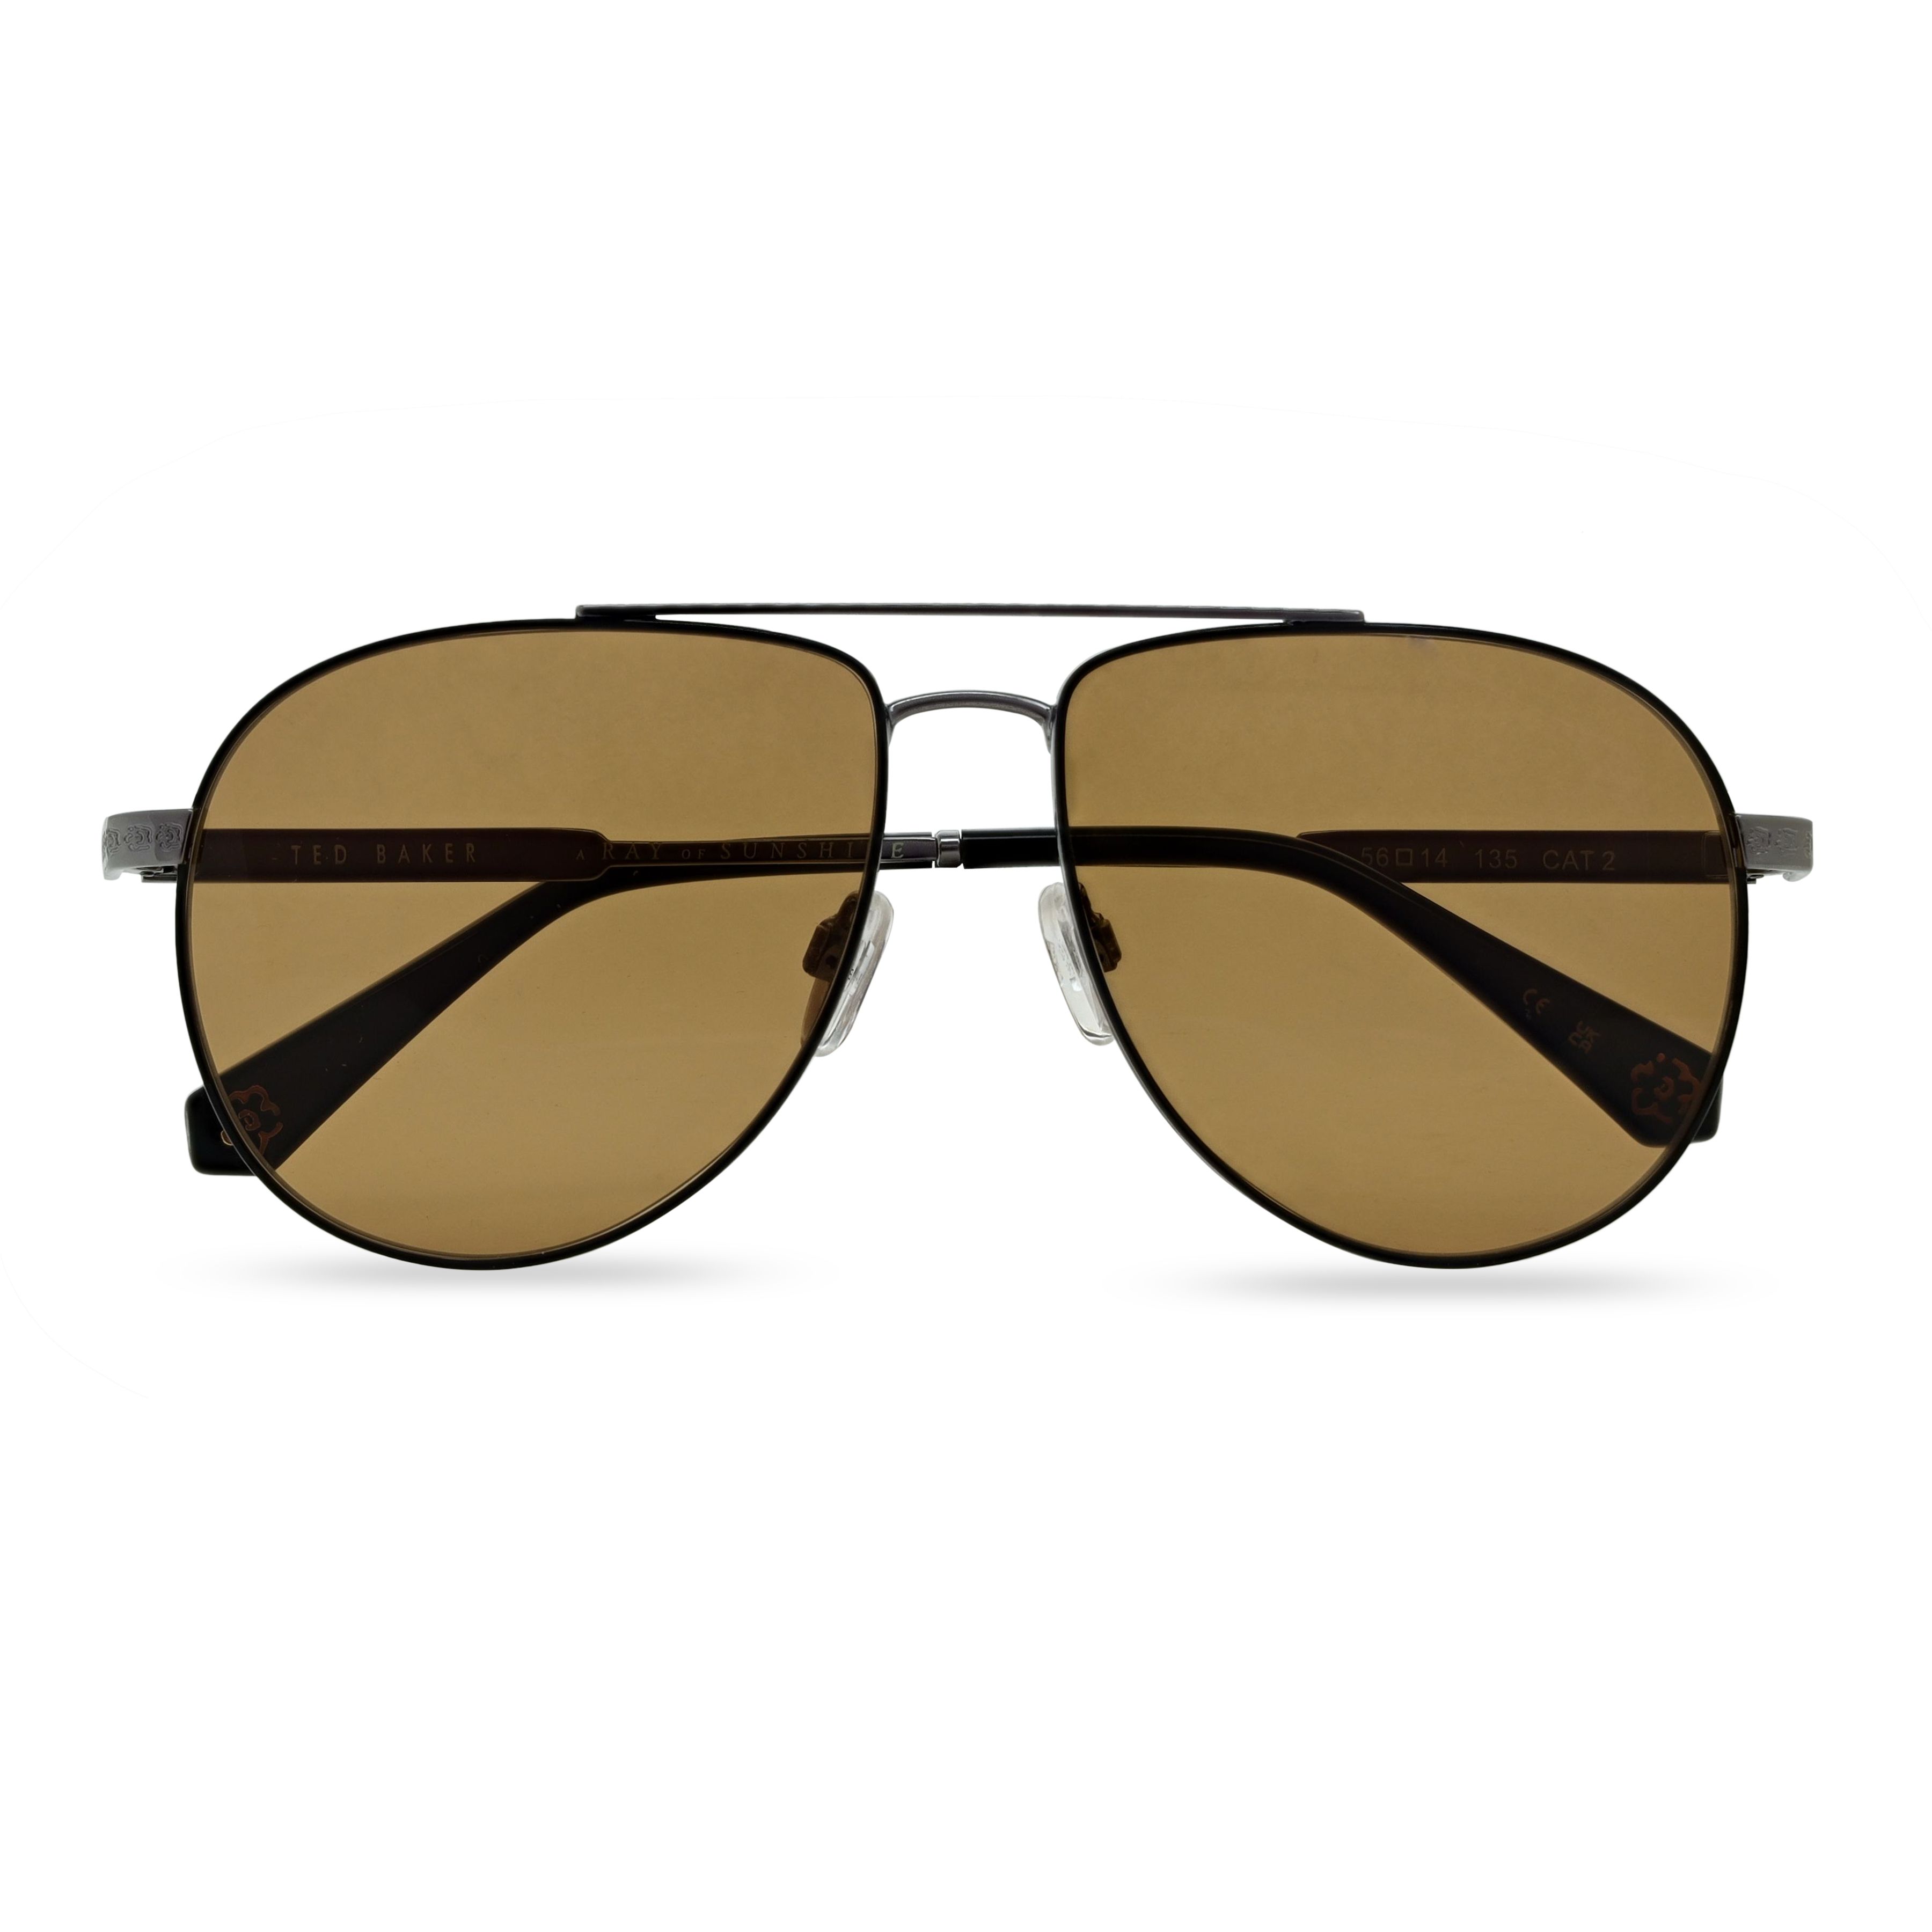 1691 Pilot Sunglasses 901 - size 55